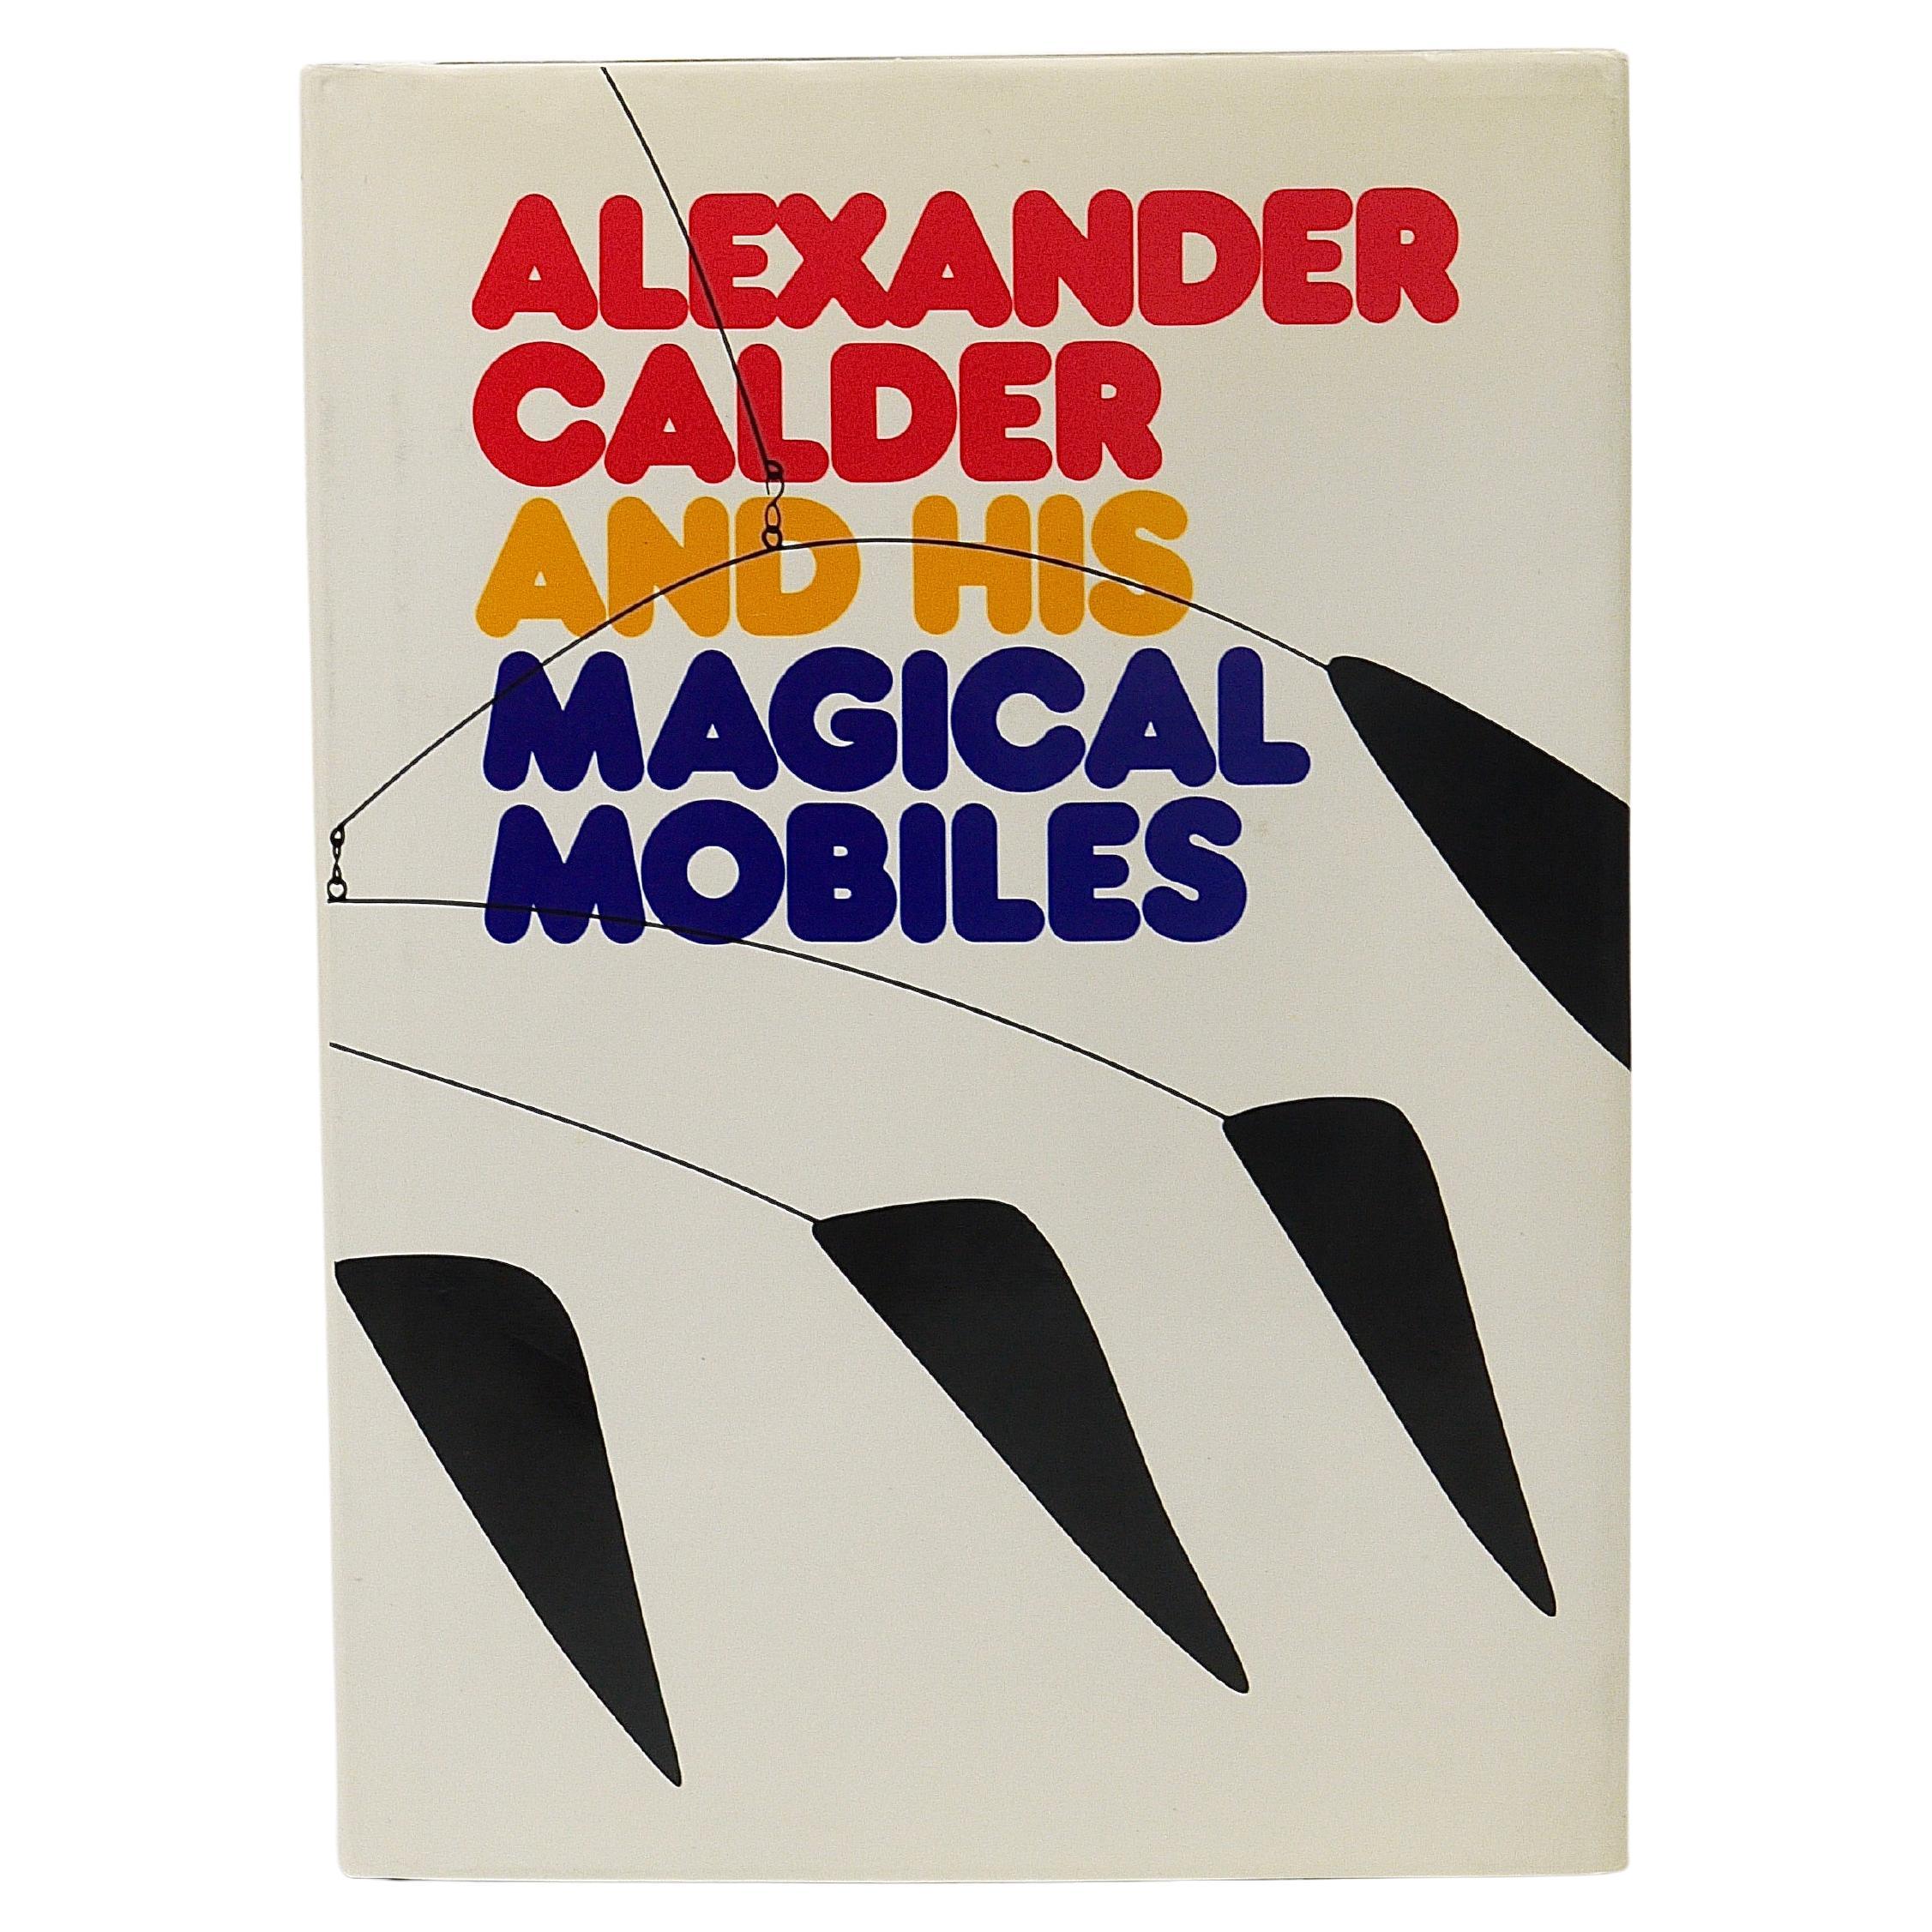 book　calder　More　Collectibles　For　oscar　1stDibs　Sale　renta　at　Calder　de　Furniture　coffee　table　Alexander　furniture,　and　la